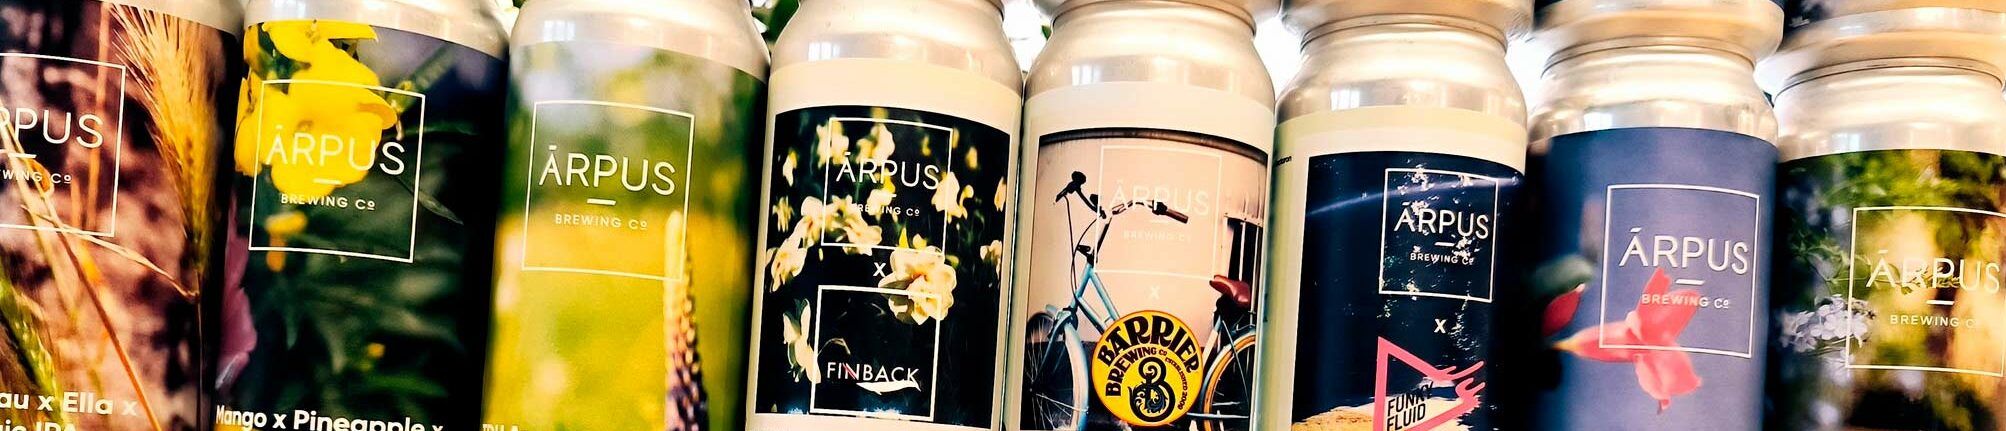 Bières de la marque Arpus alignées